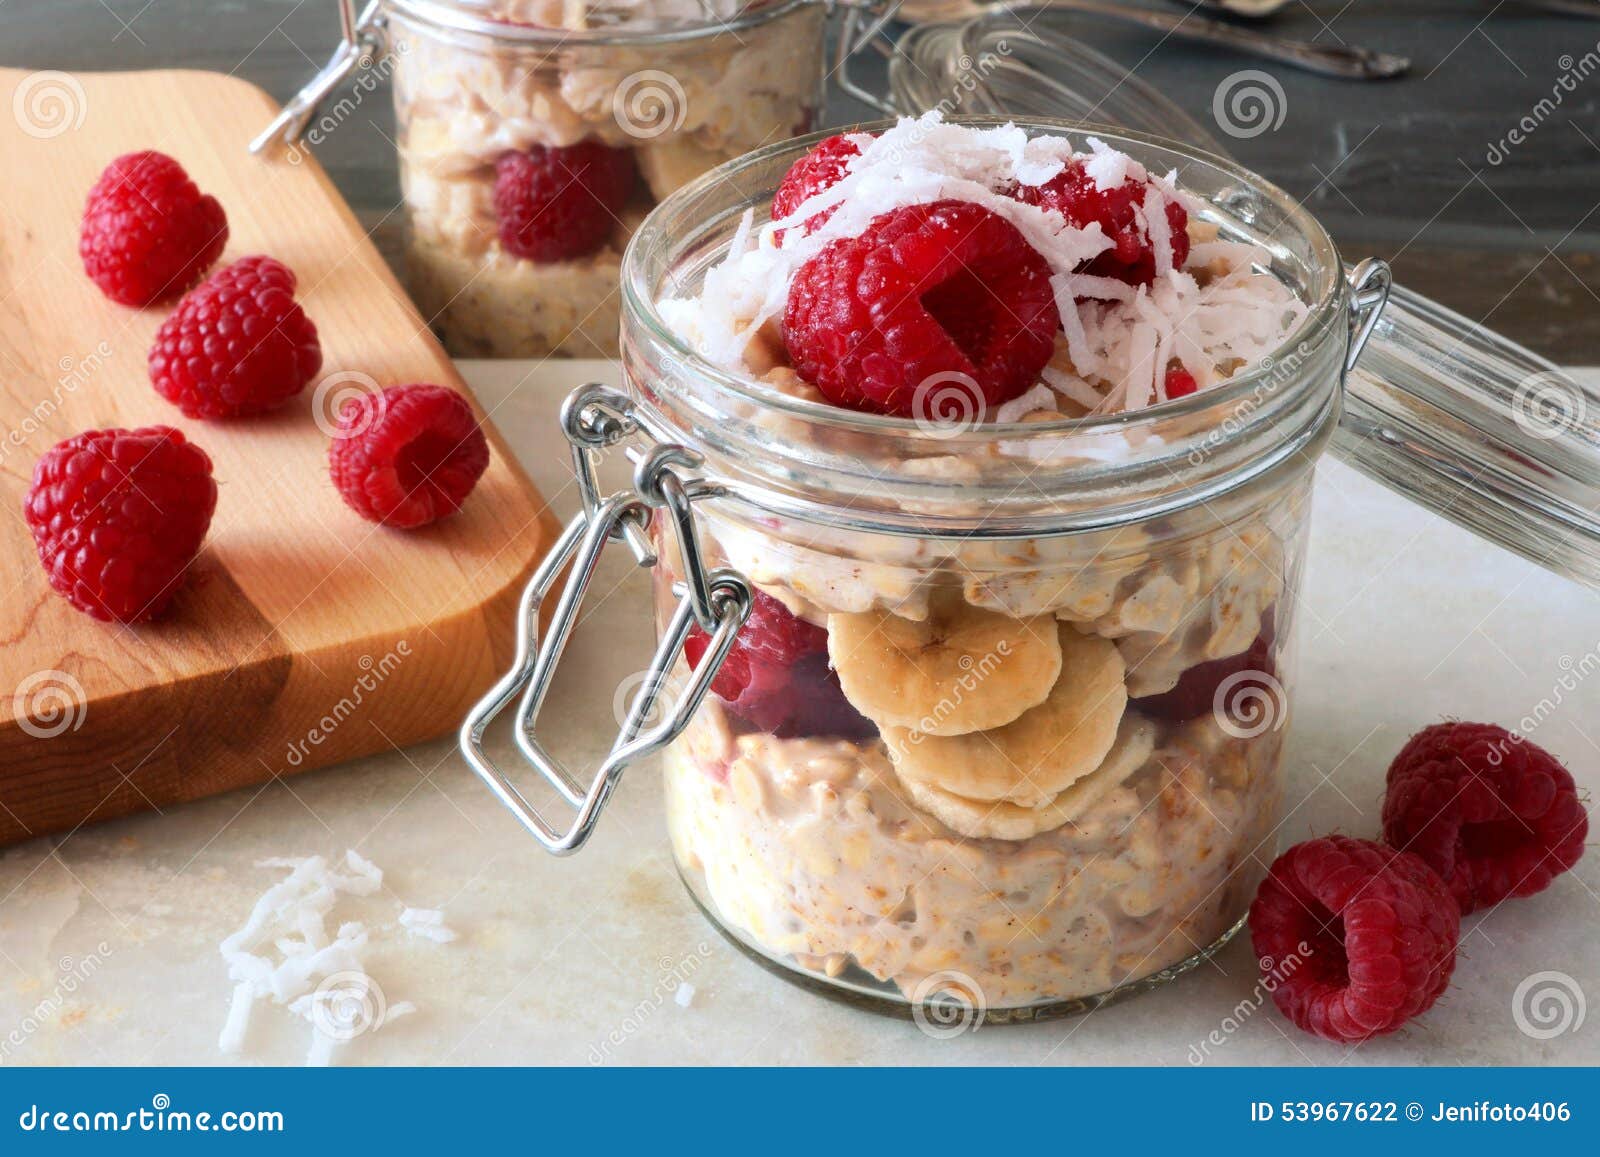 breakfast overnight oats with fresh raspberries in a jar